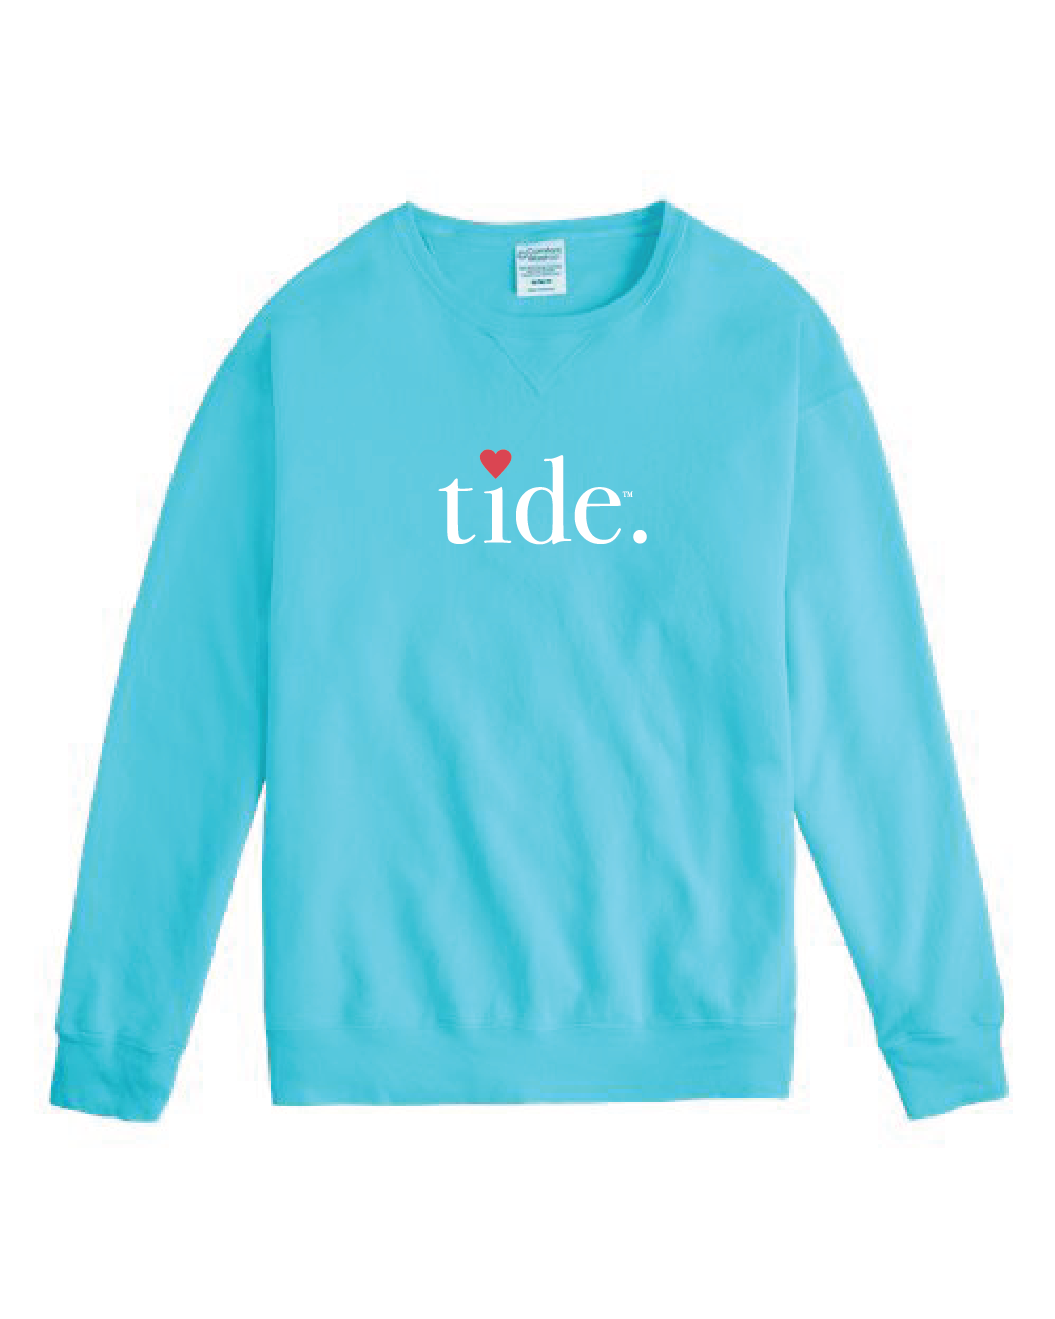 I Heart the Tide Sweatshirt